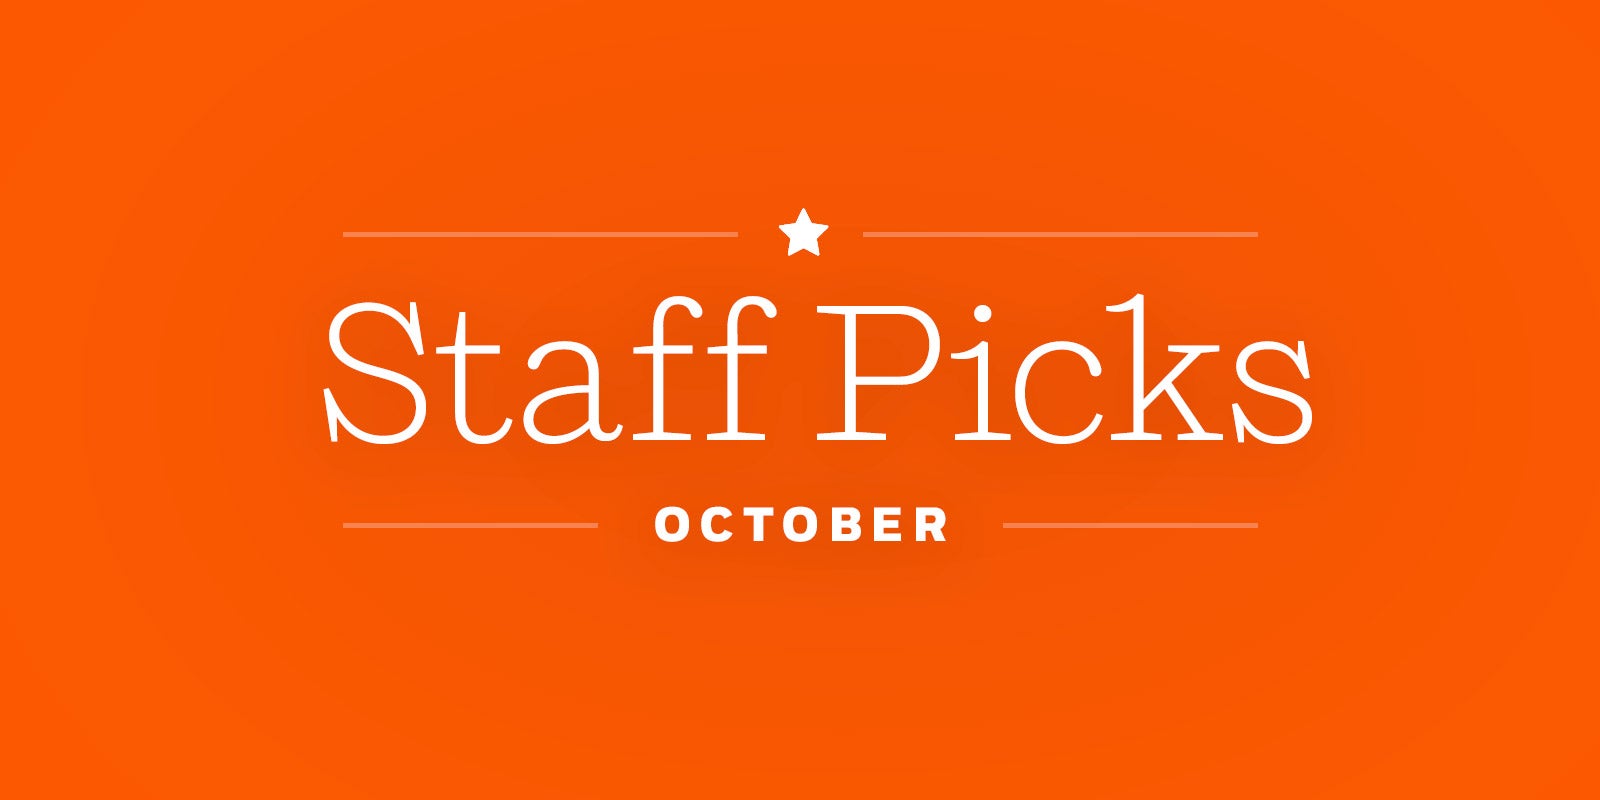 *Staff Picks for October*